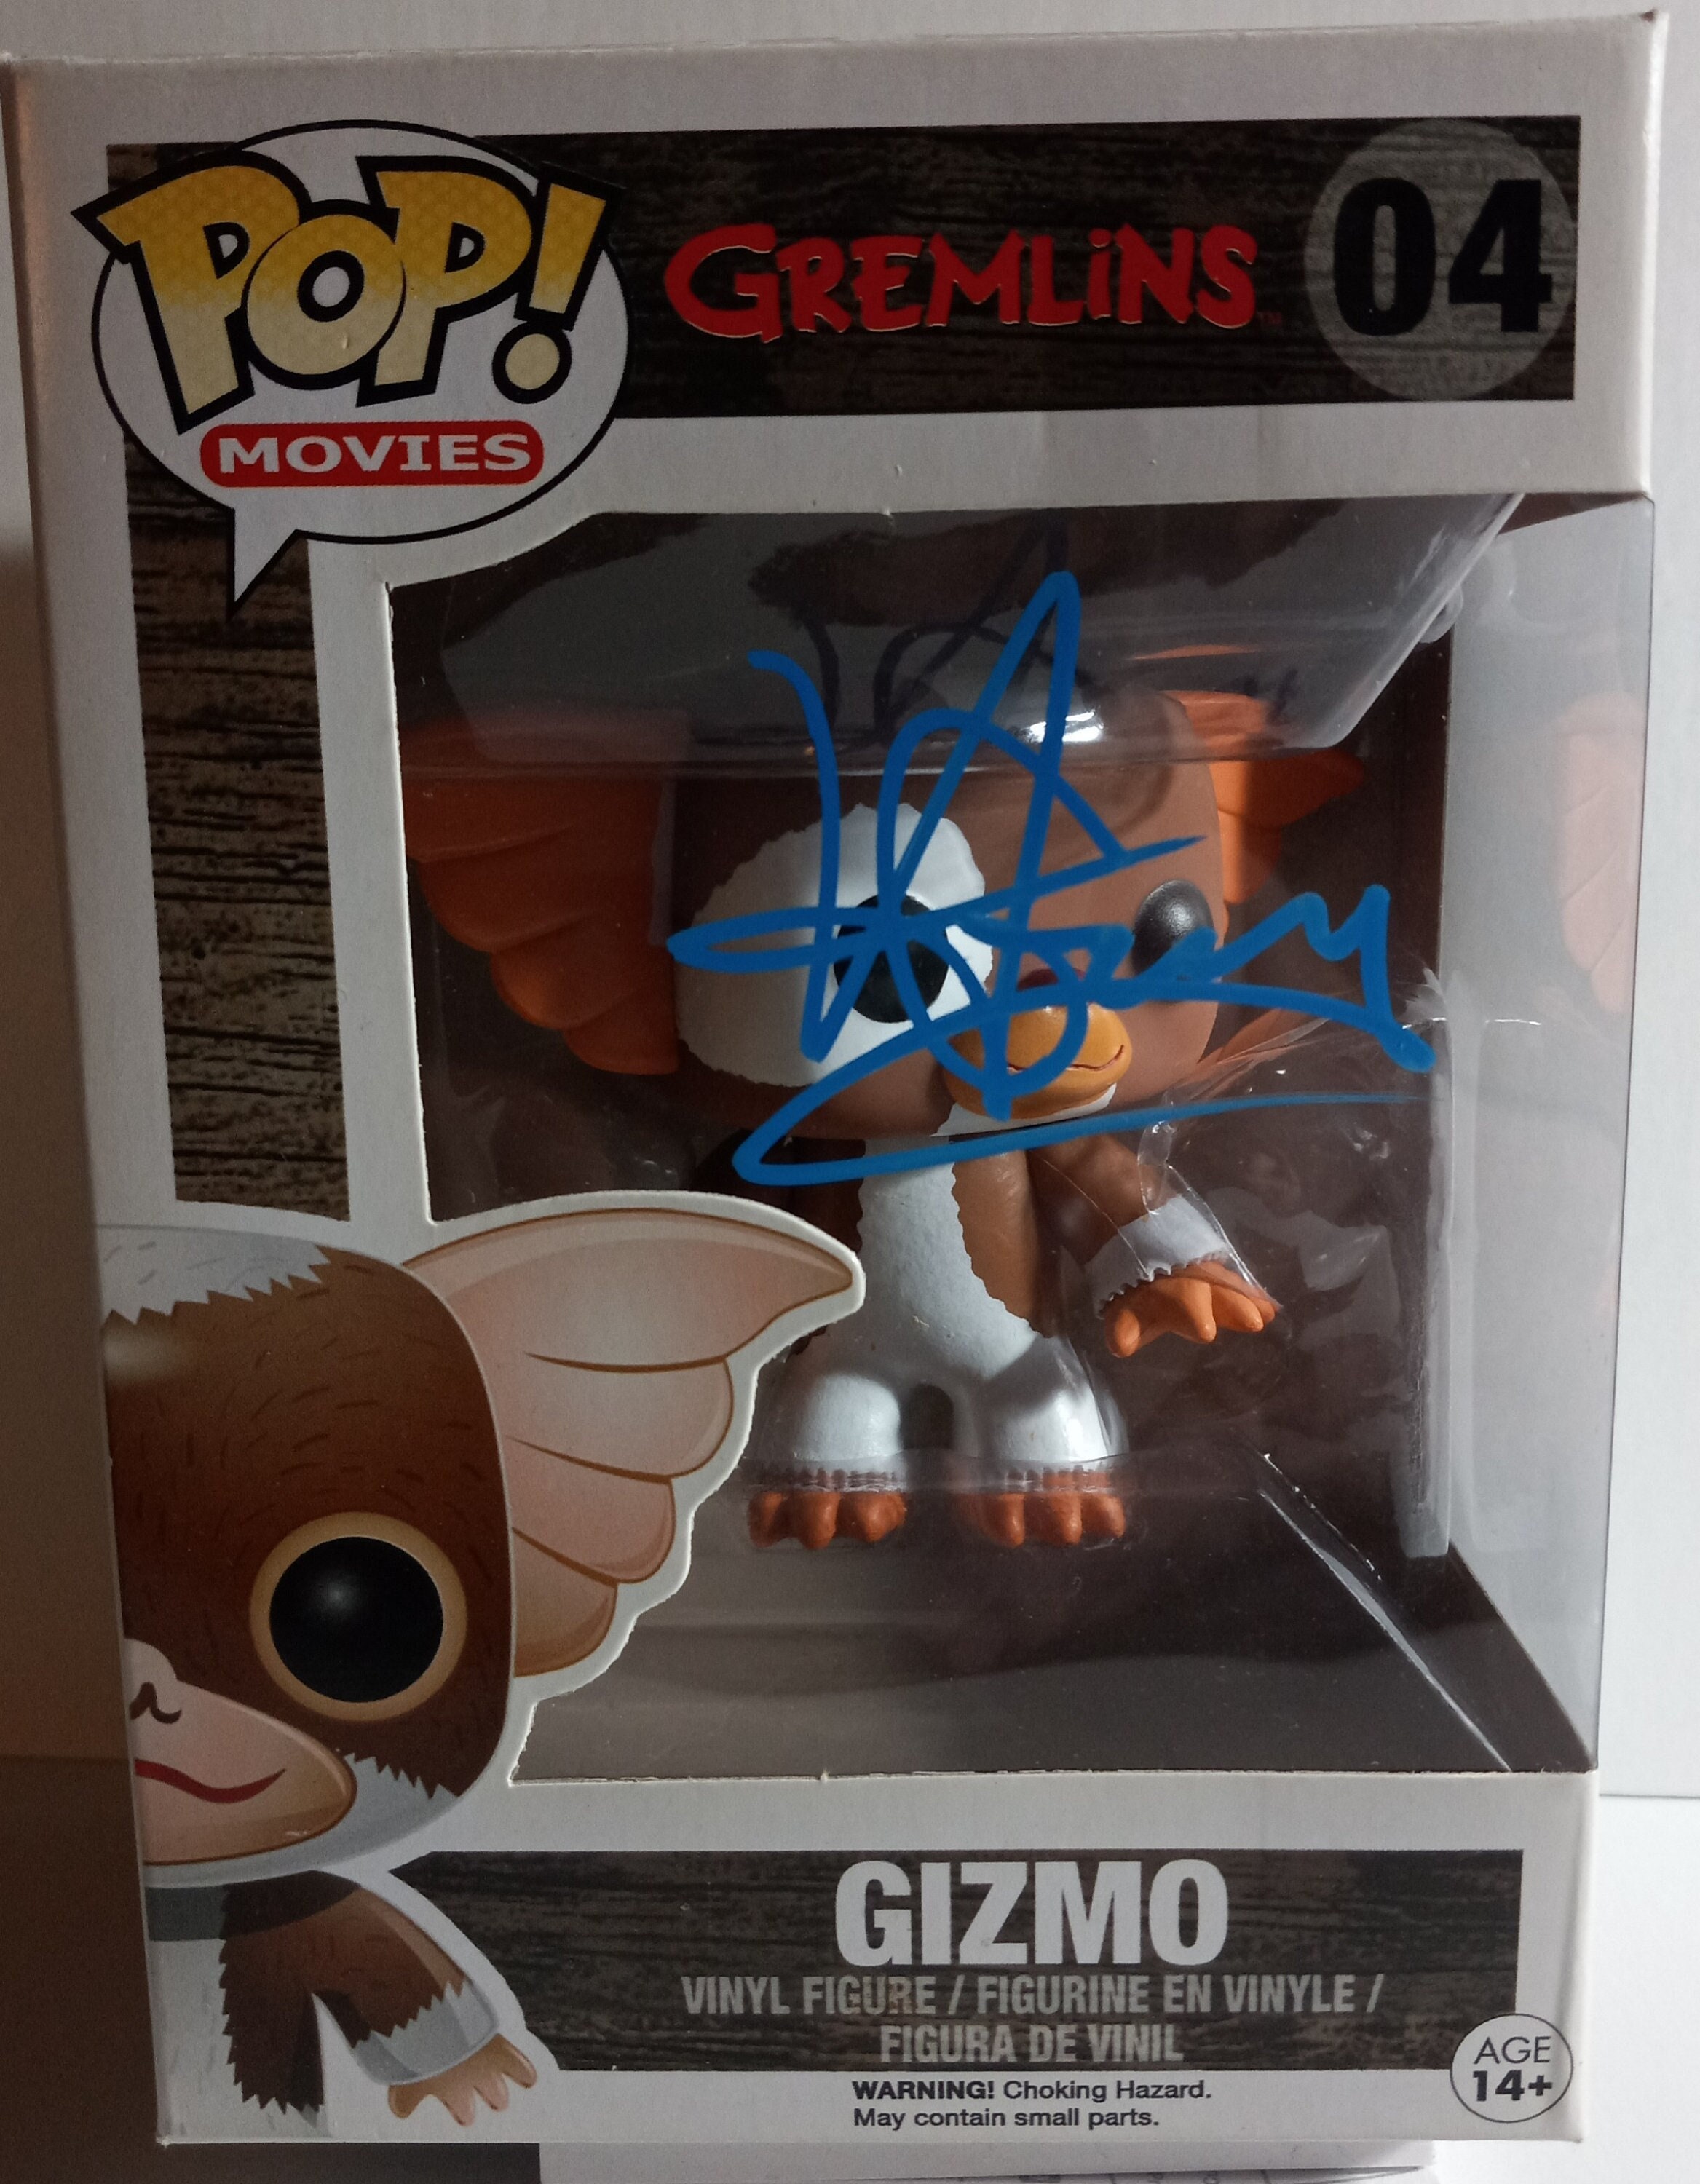 Gremlins - Gizmo Funko Pop! #04 Special Edition